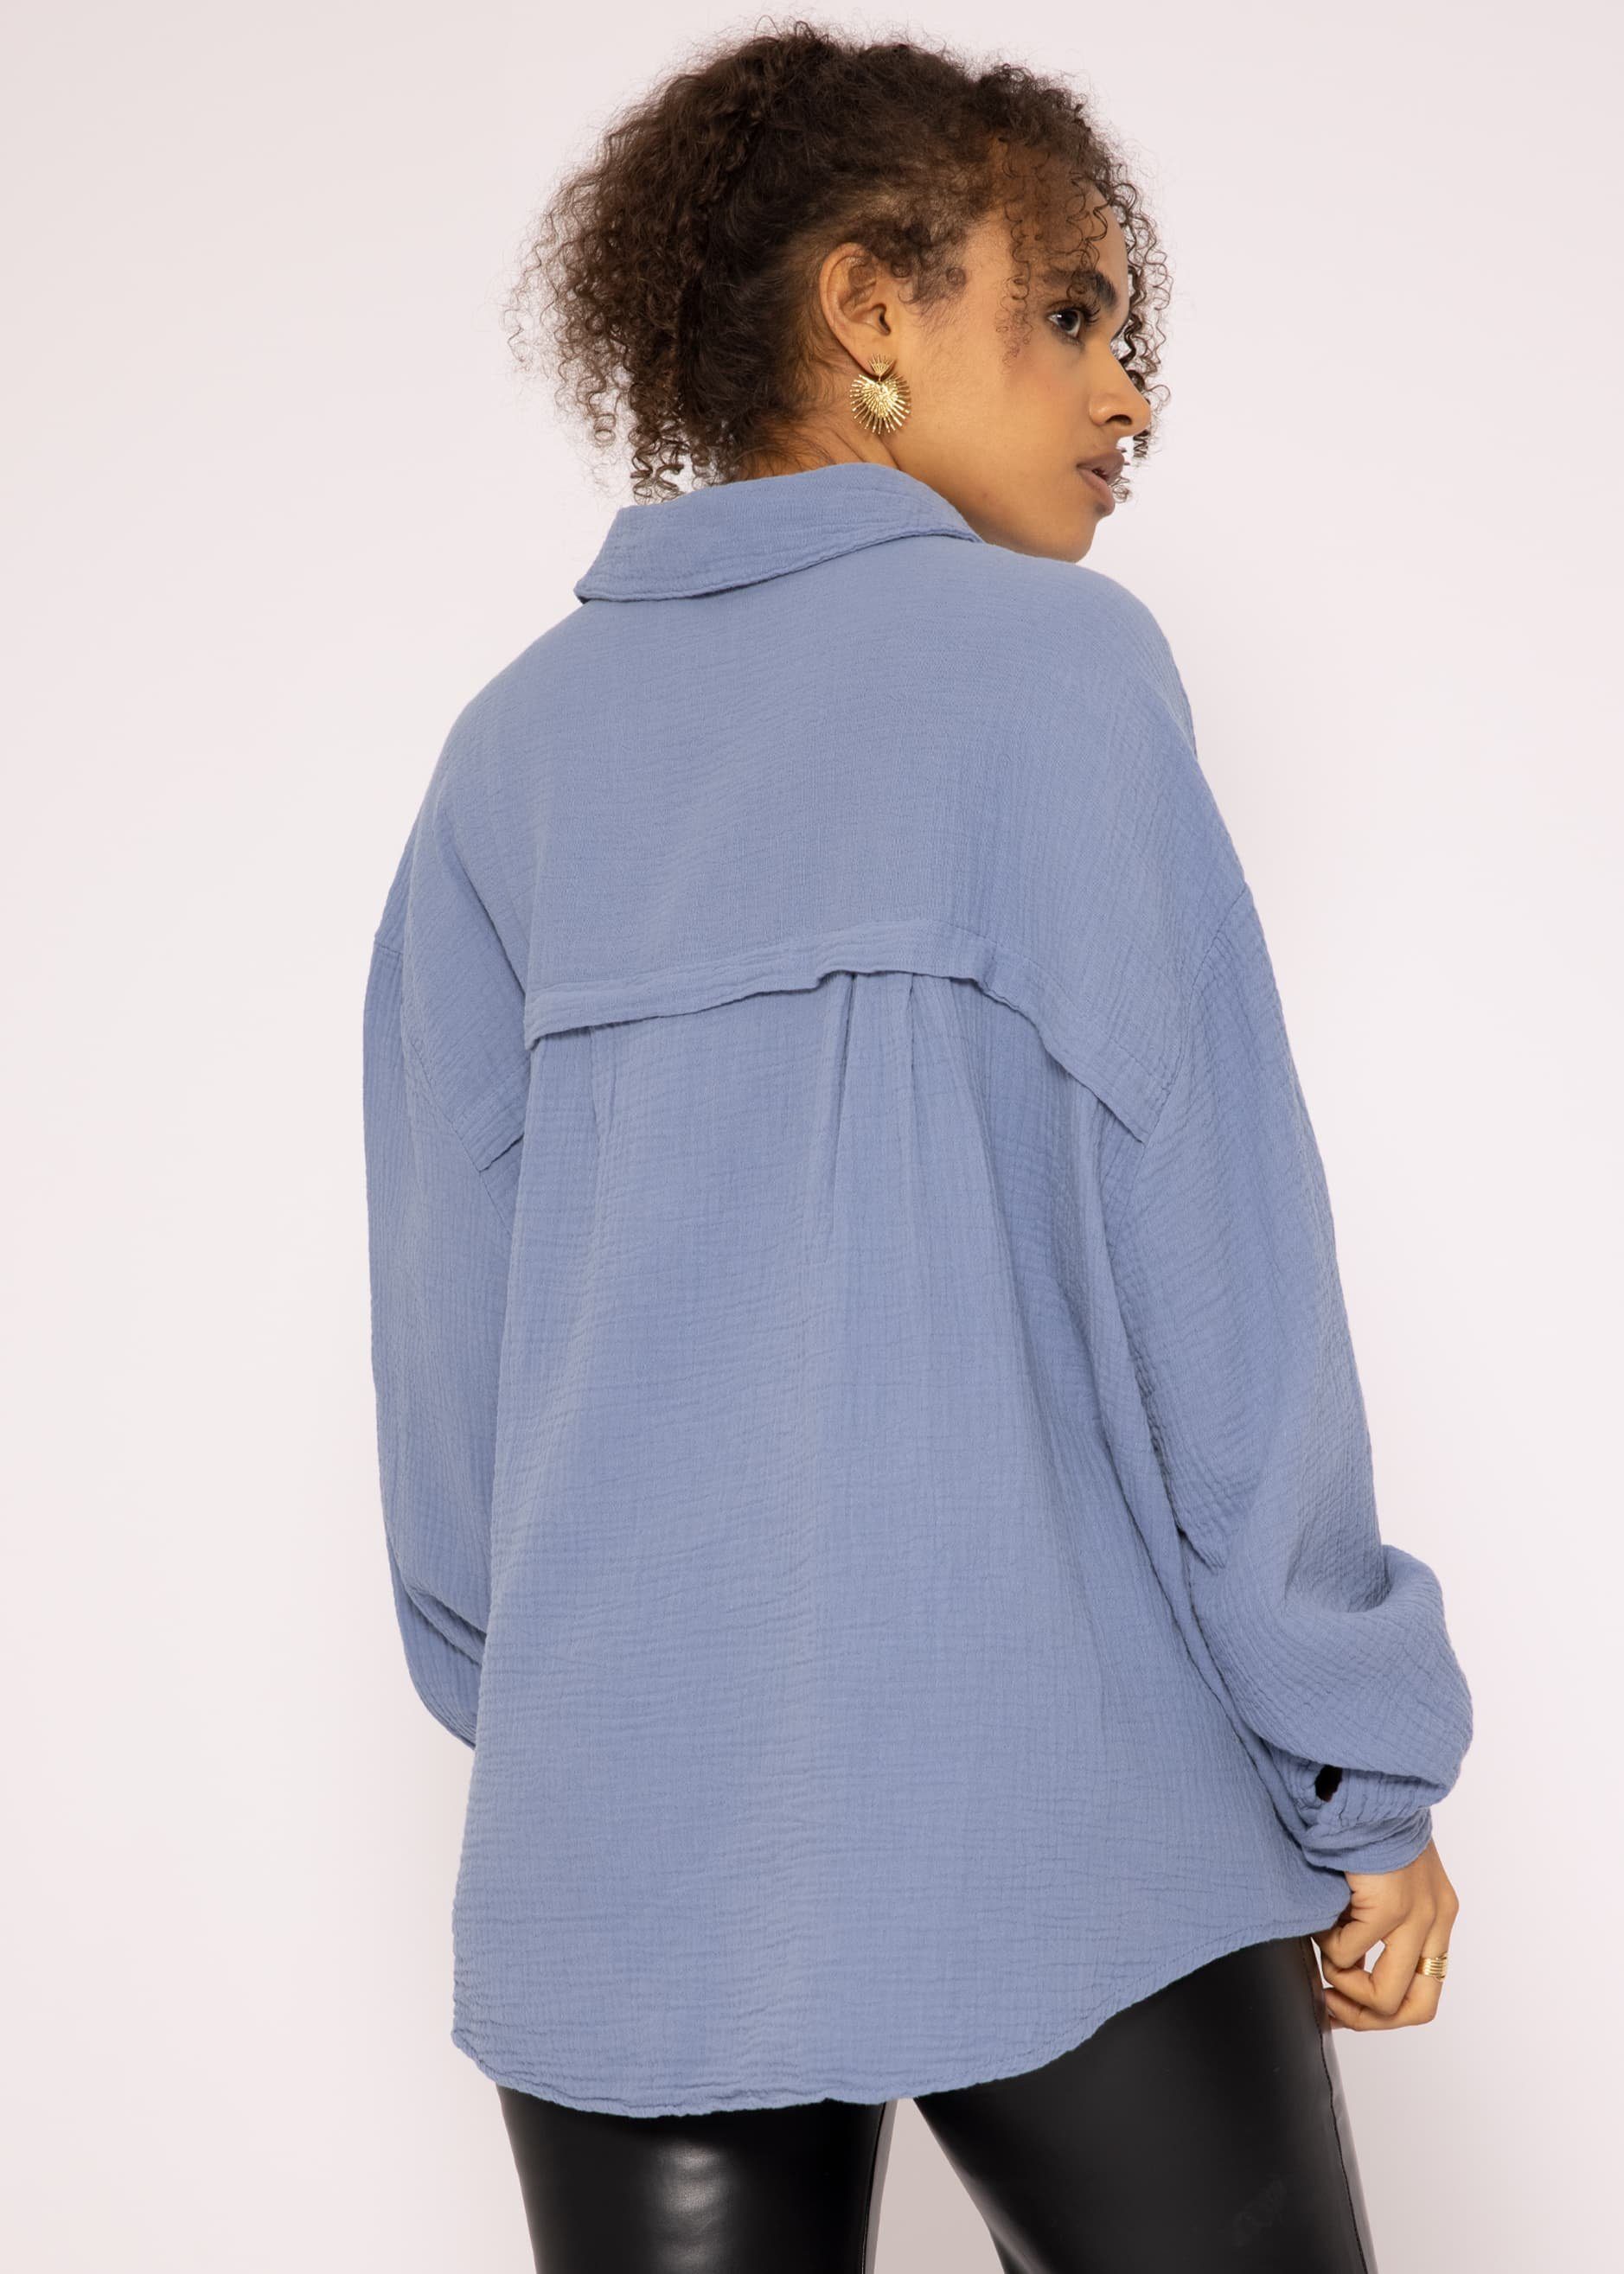 36-48) Hemdbluse Longbluse lang Baumwolle Damen Size Oversize SASSYCLASSY (Gr. mit aus One Blau Musselin V-Ausschnitt, Langarm Bluse